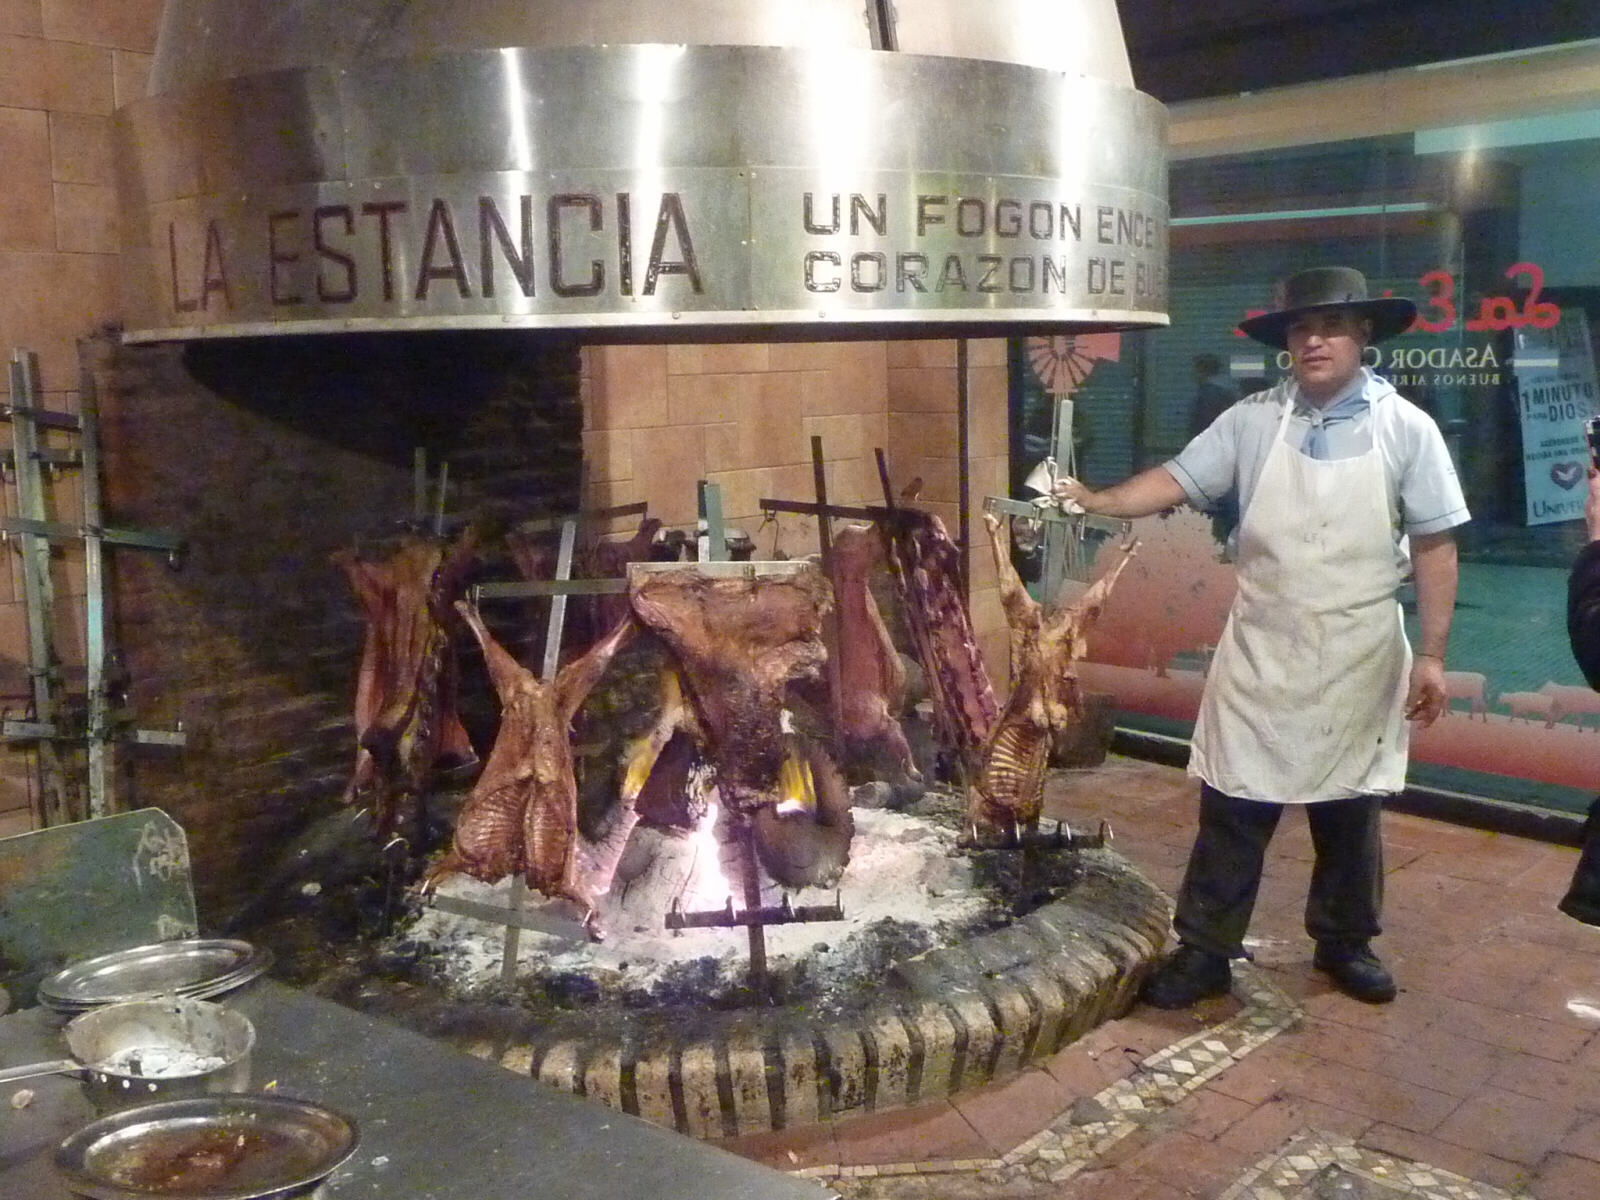 La Estancia restaurant in Buenos Aires, Argentina